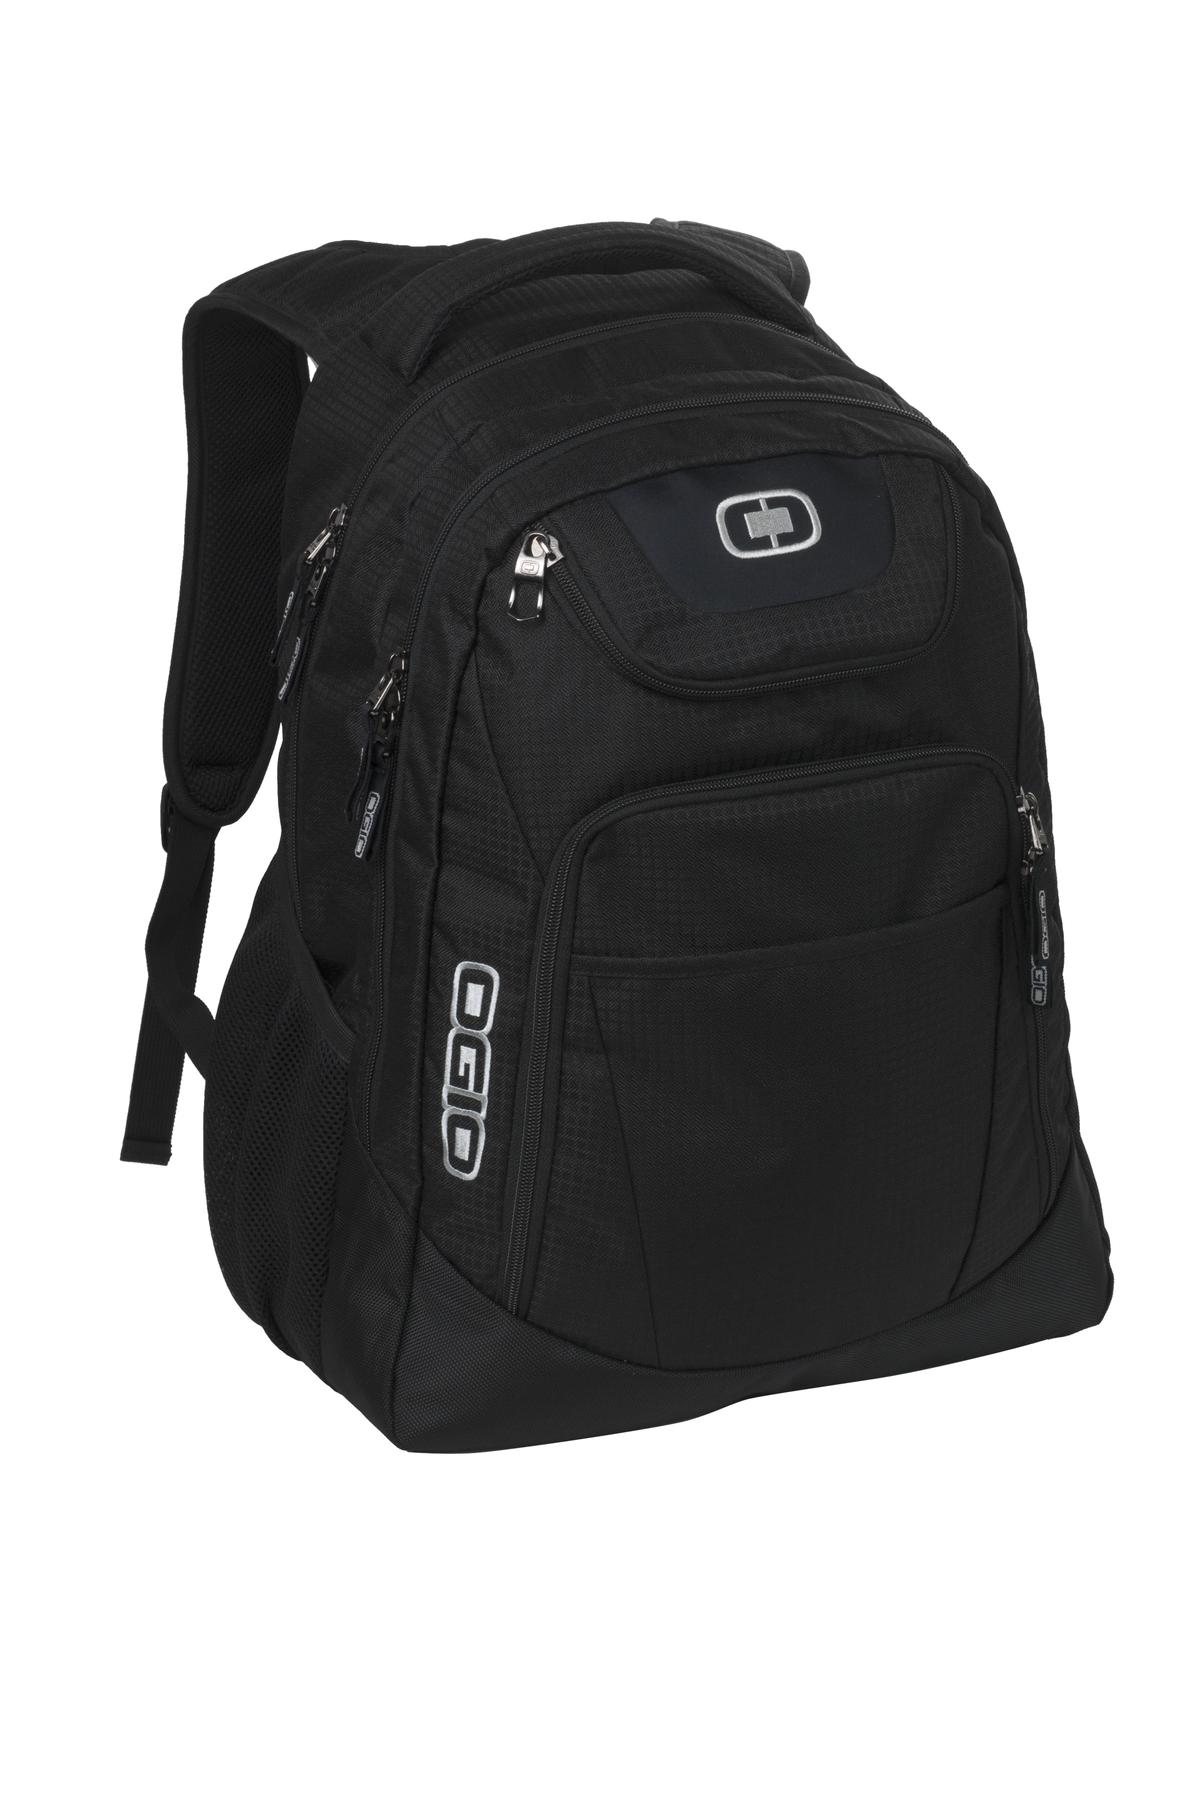 OGIO Hospitality Bags ® Excelsior Pack.-OGIO